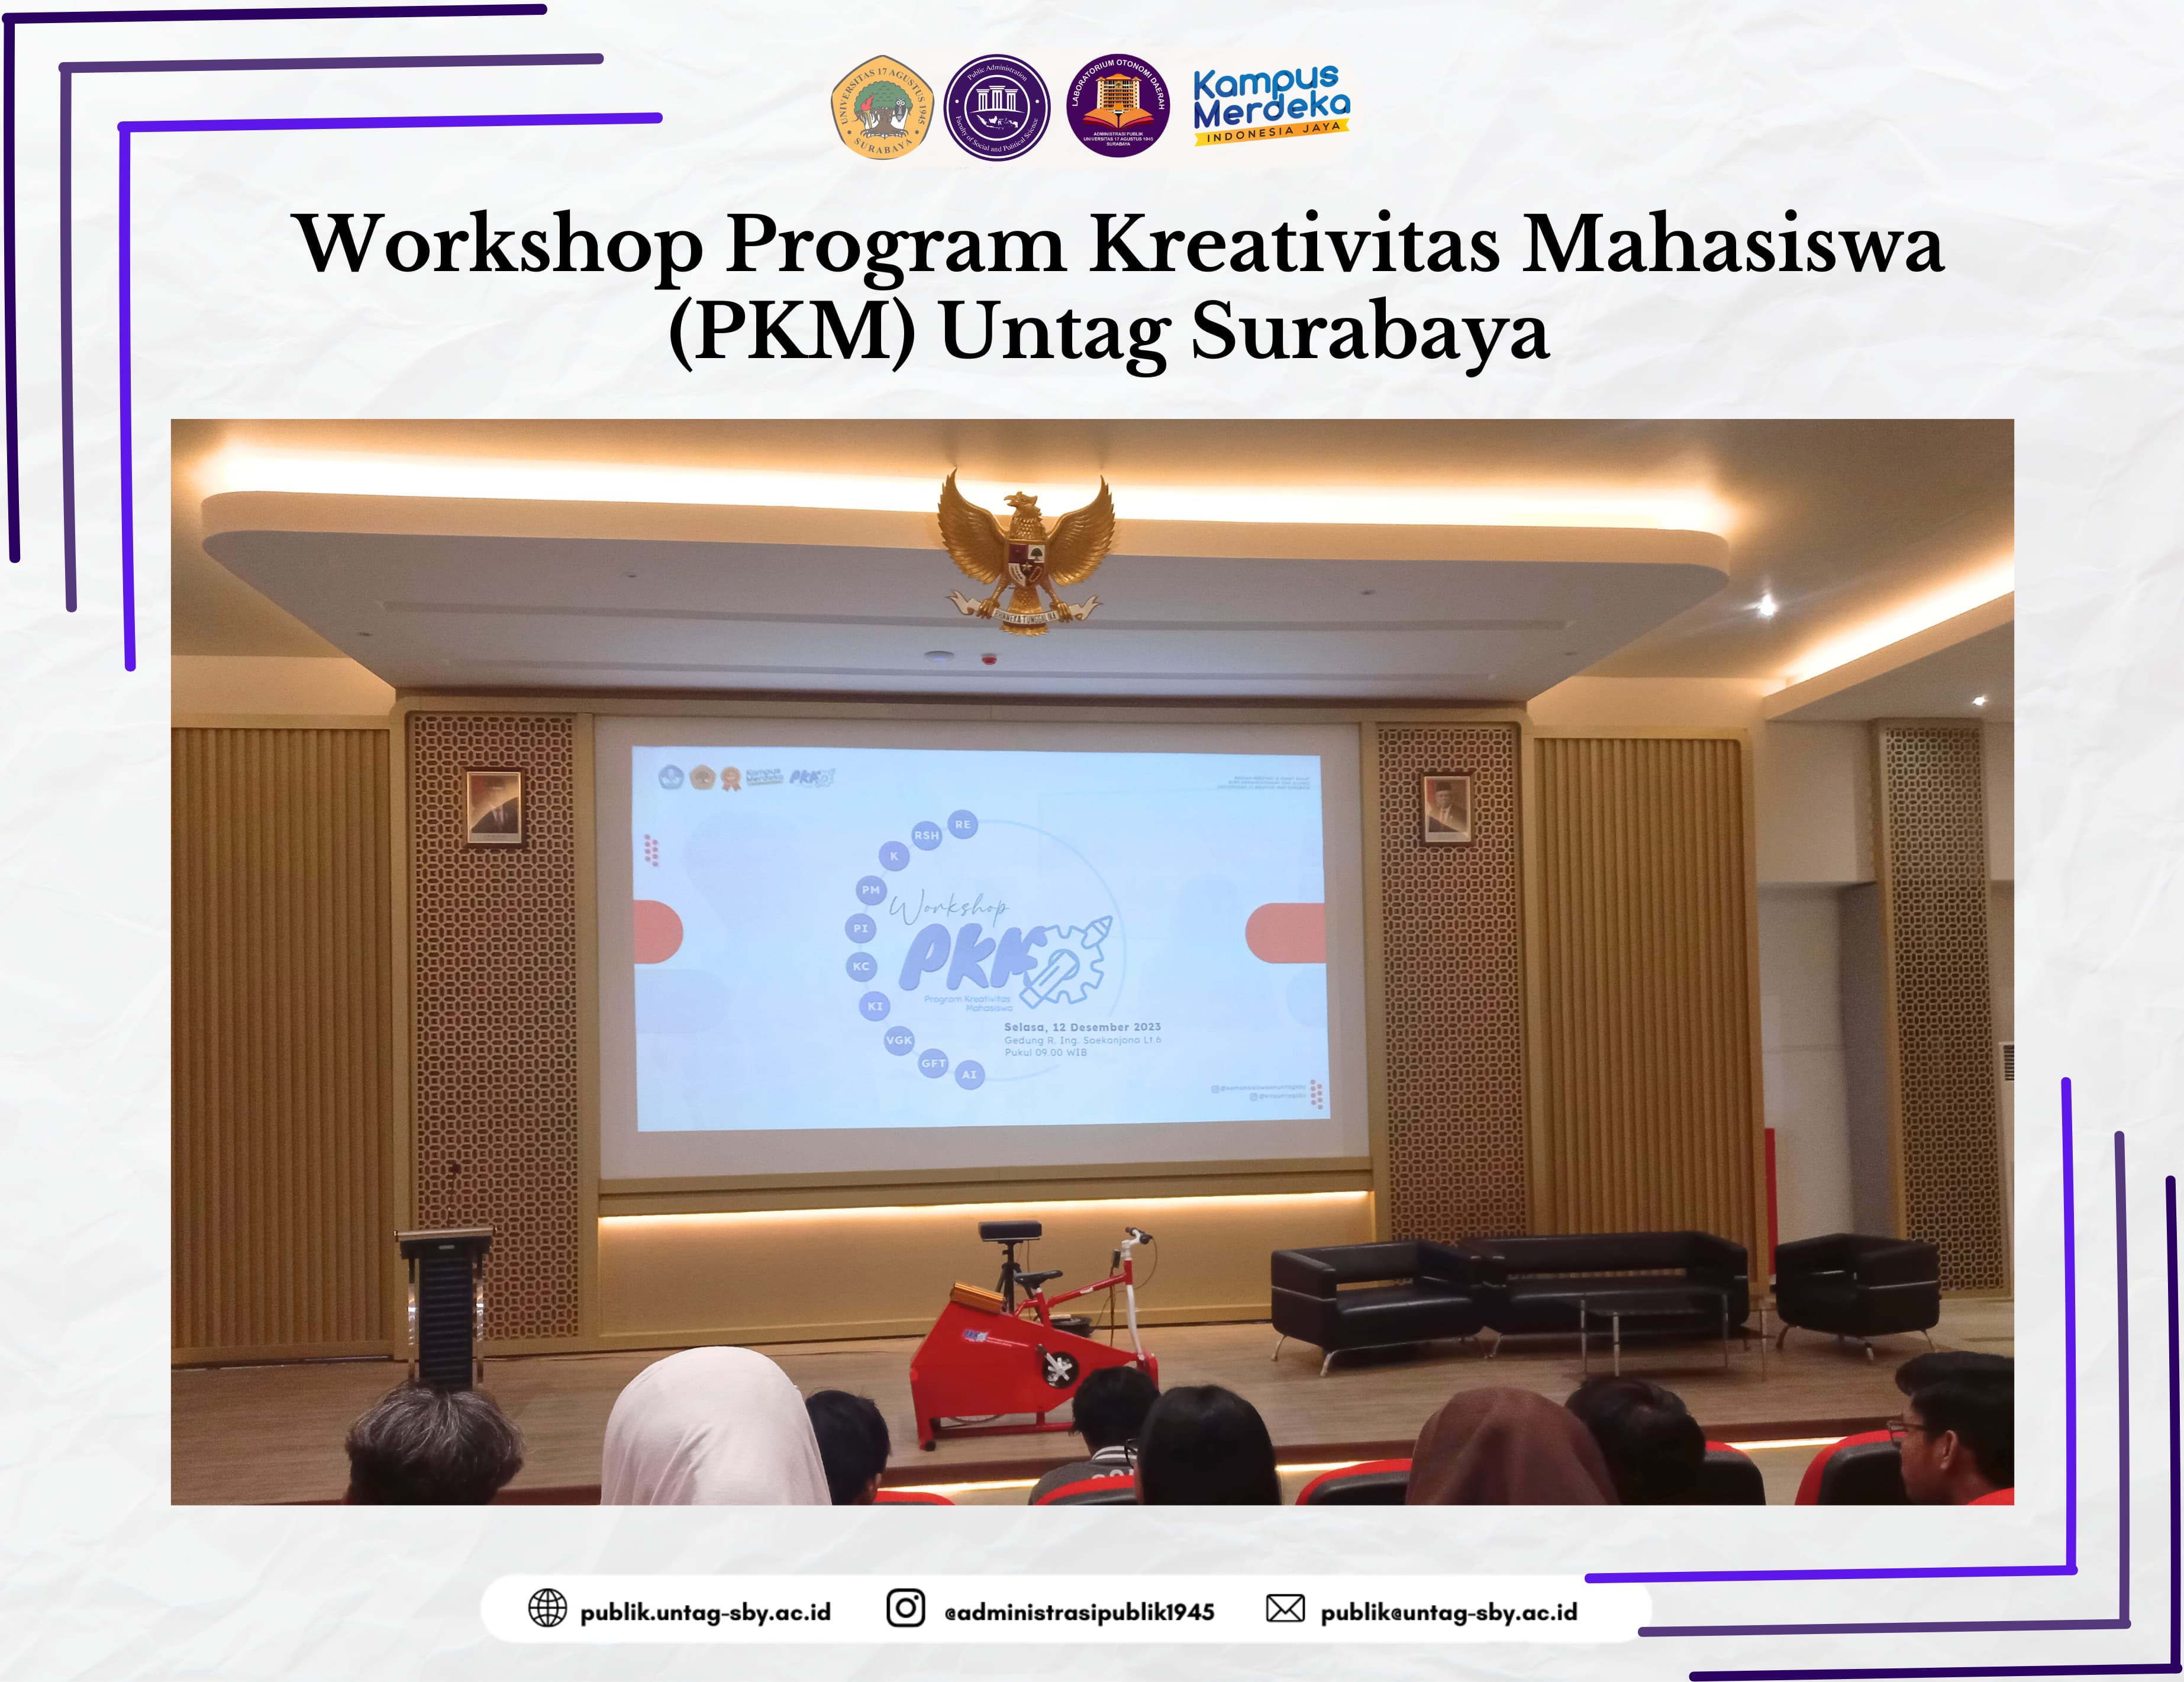 Workshop Program Kreativitas Mahasiswa (PKM) Untag Surabaya